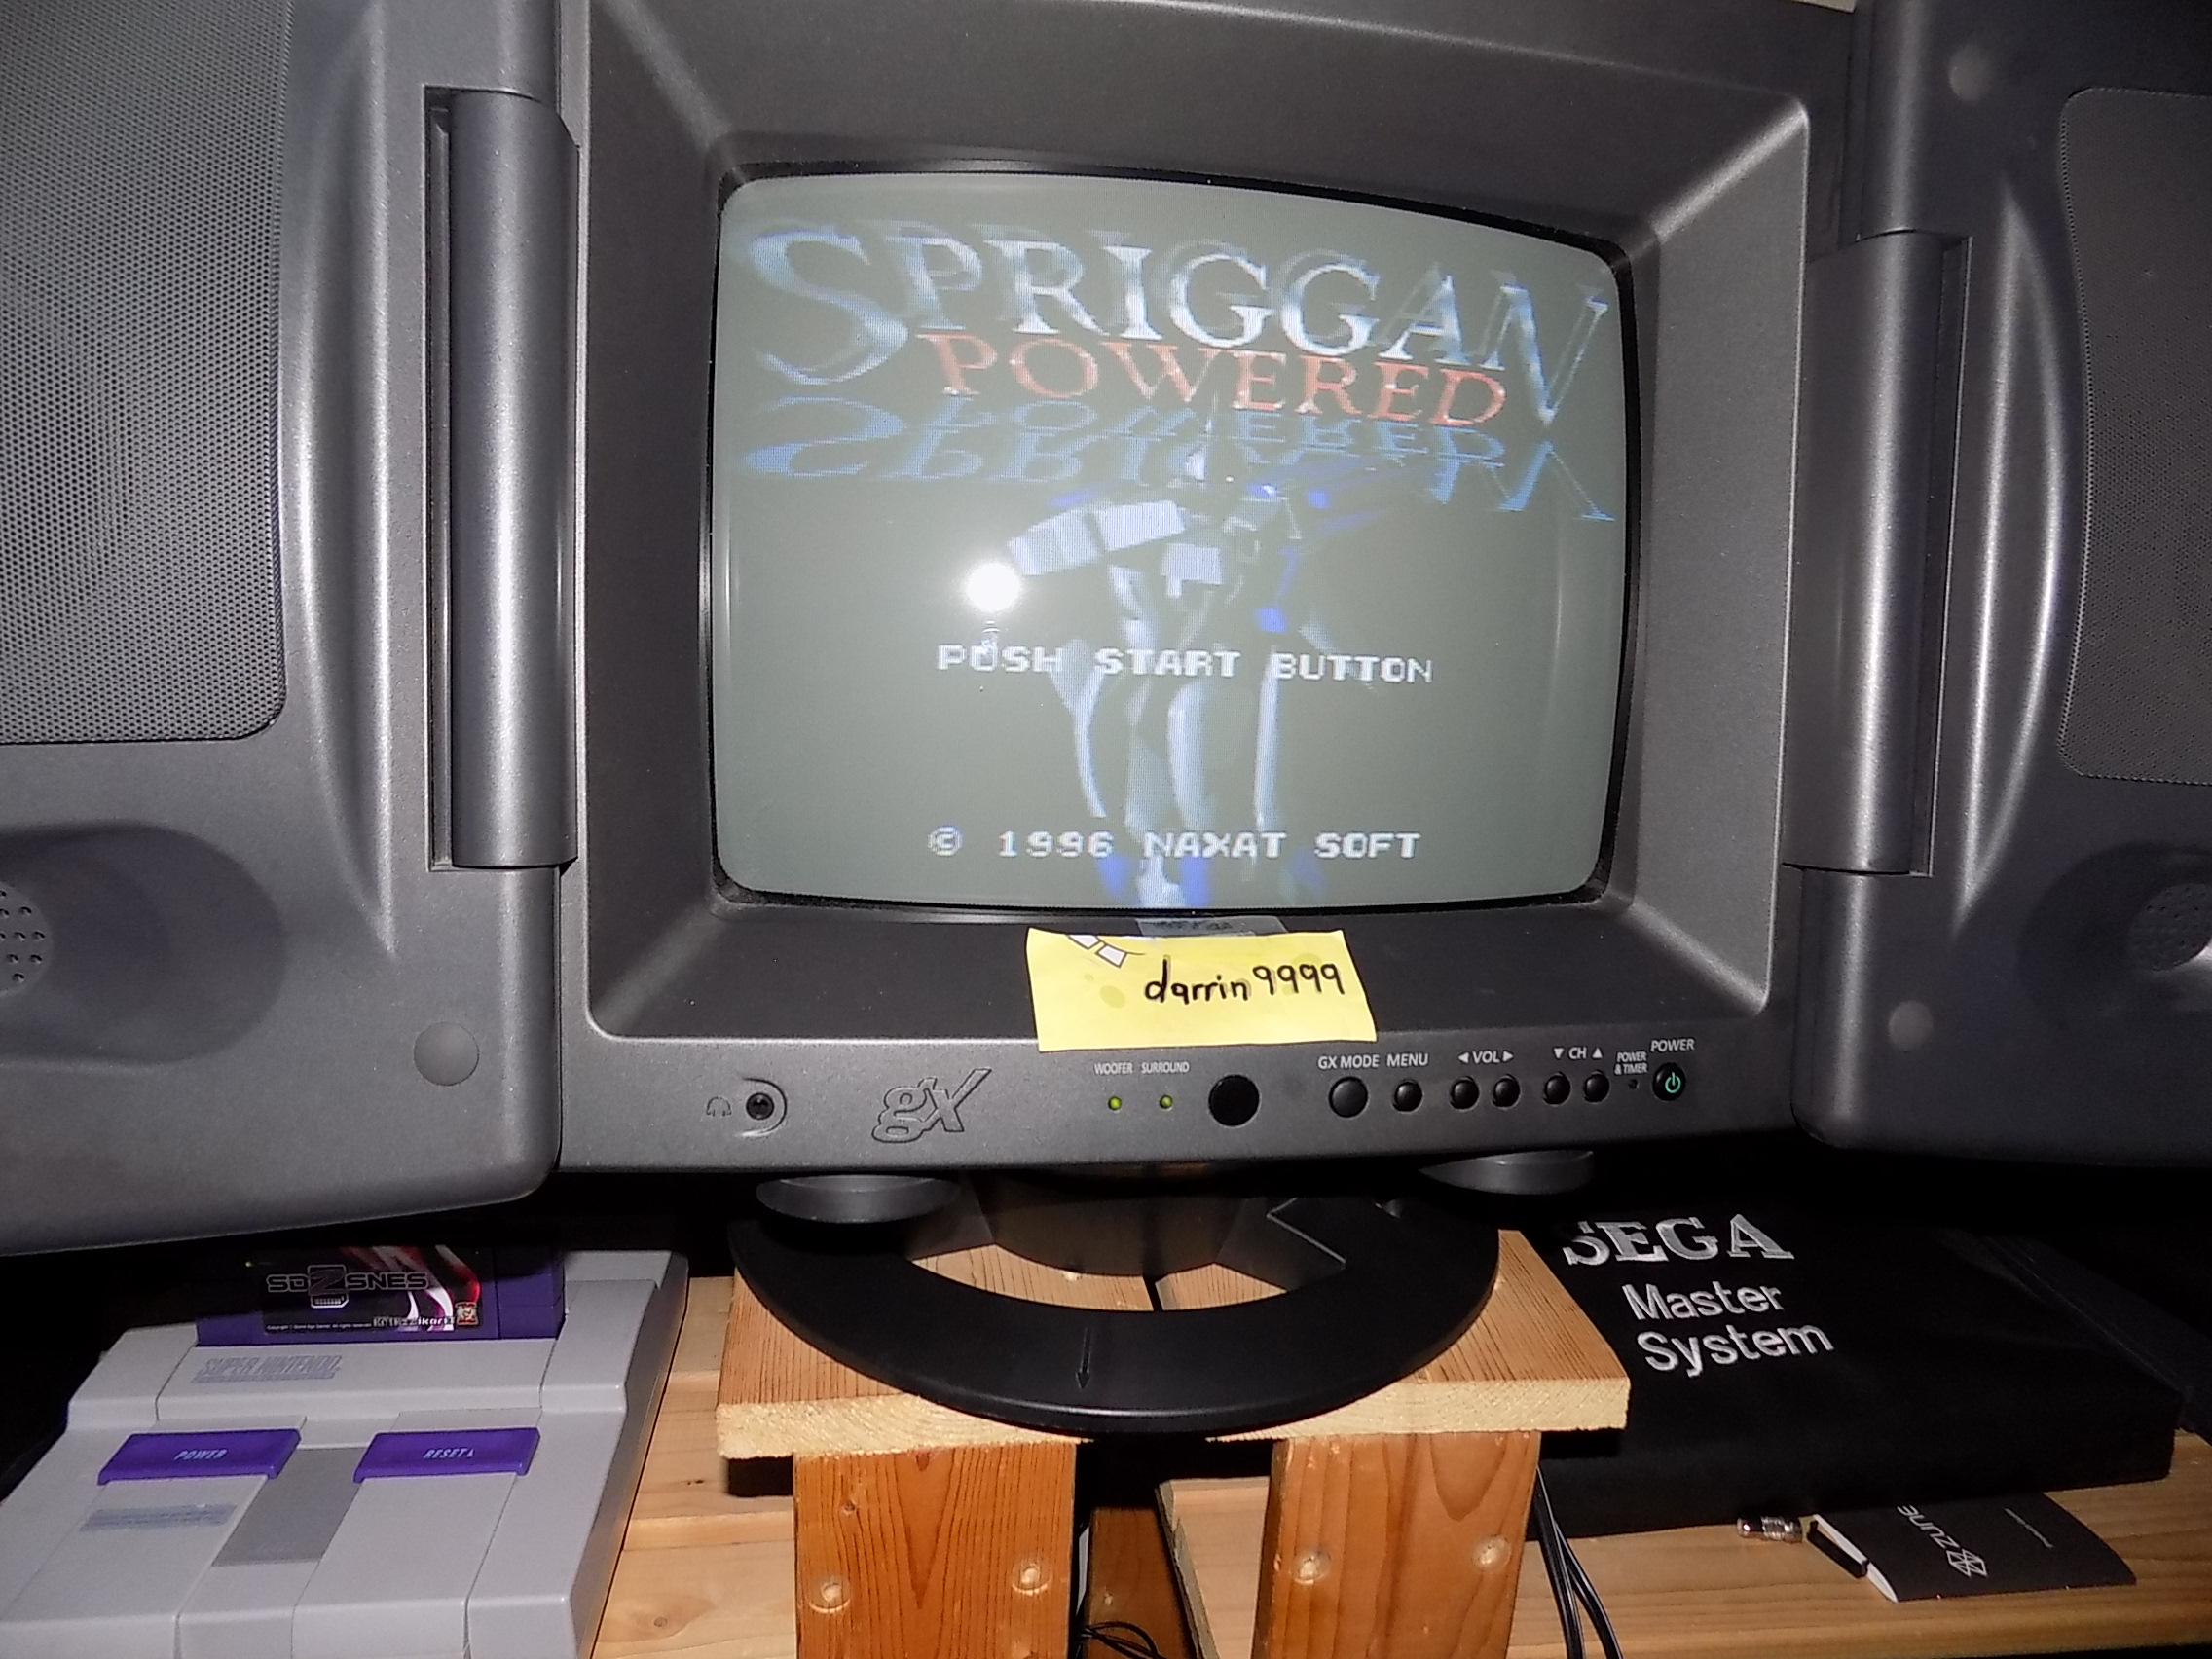 darrin9999: Spriggan Powered (SNES/Super Famicom) 78,500 points on 2019-06-09 16:43:34